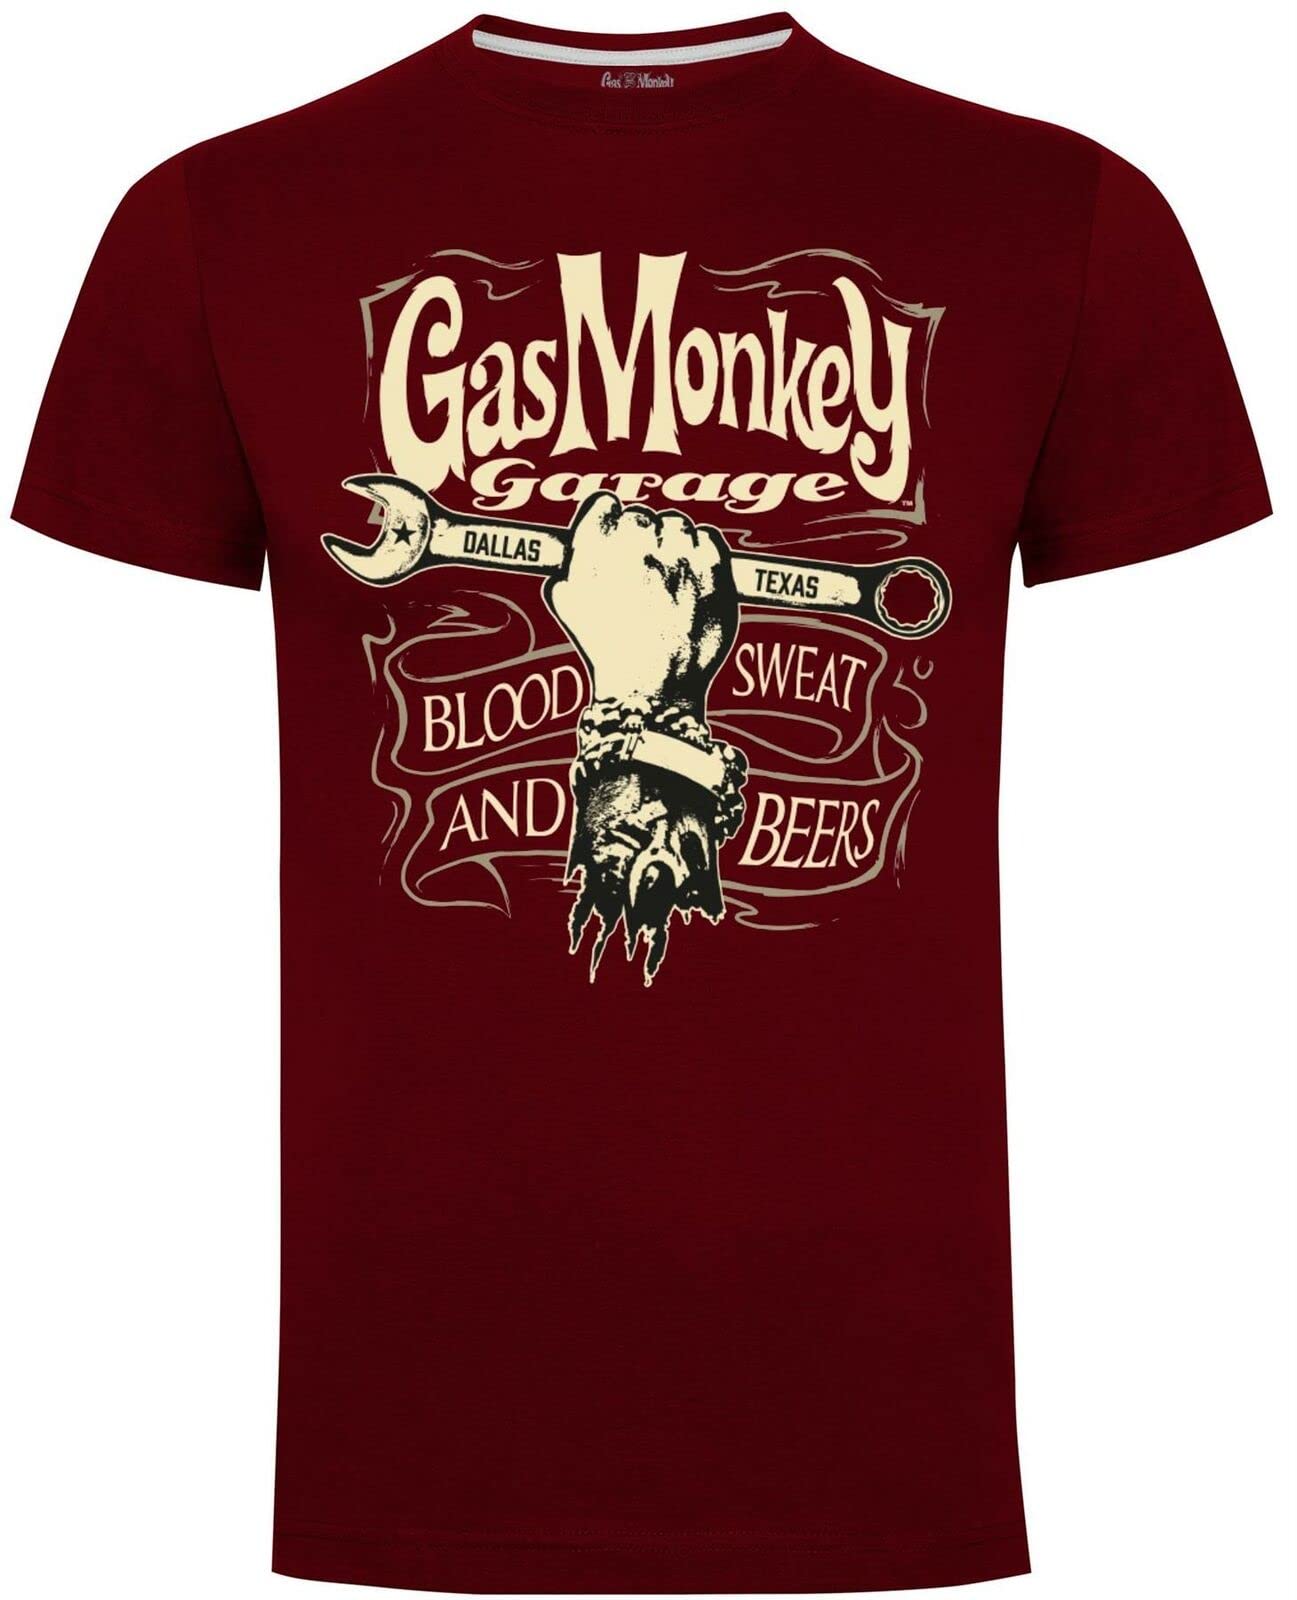 Gas Monkey Garage Herren T-Shirt Mechanics Spanner Burgunderrot Gr. L, burgunderfarben